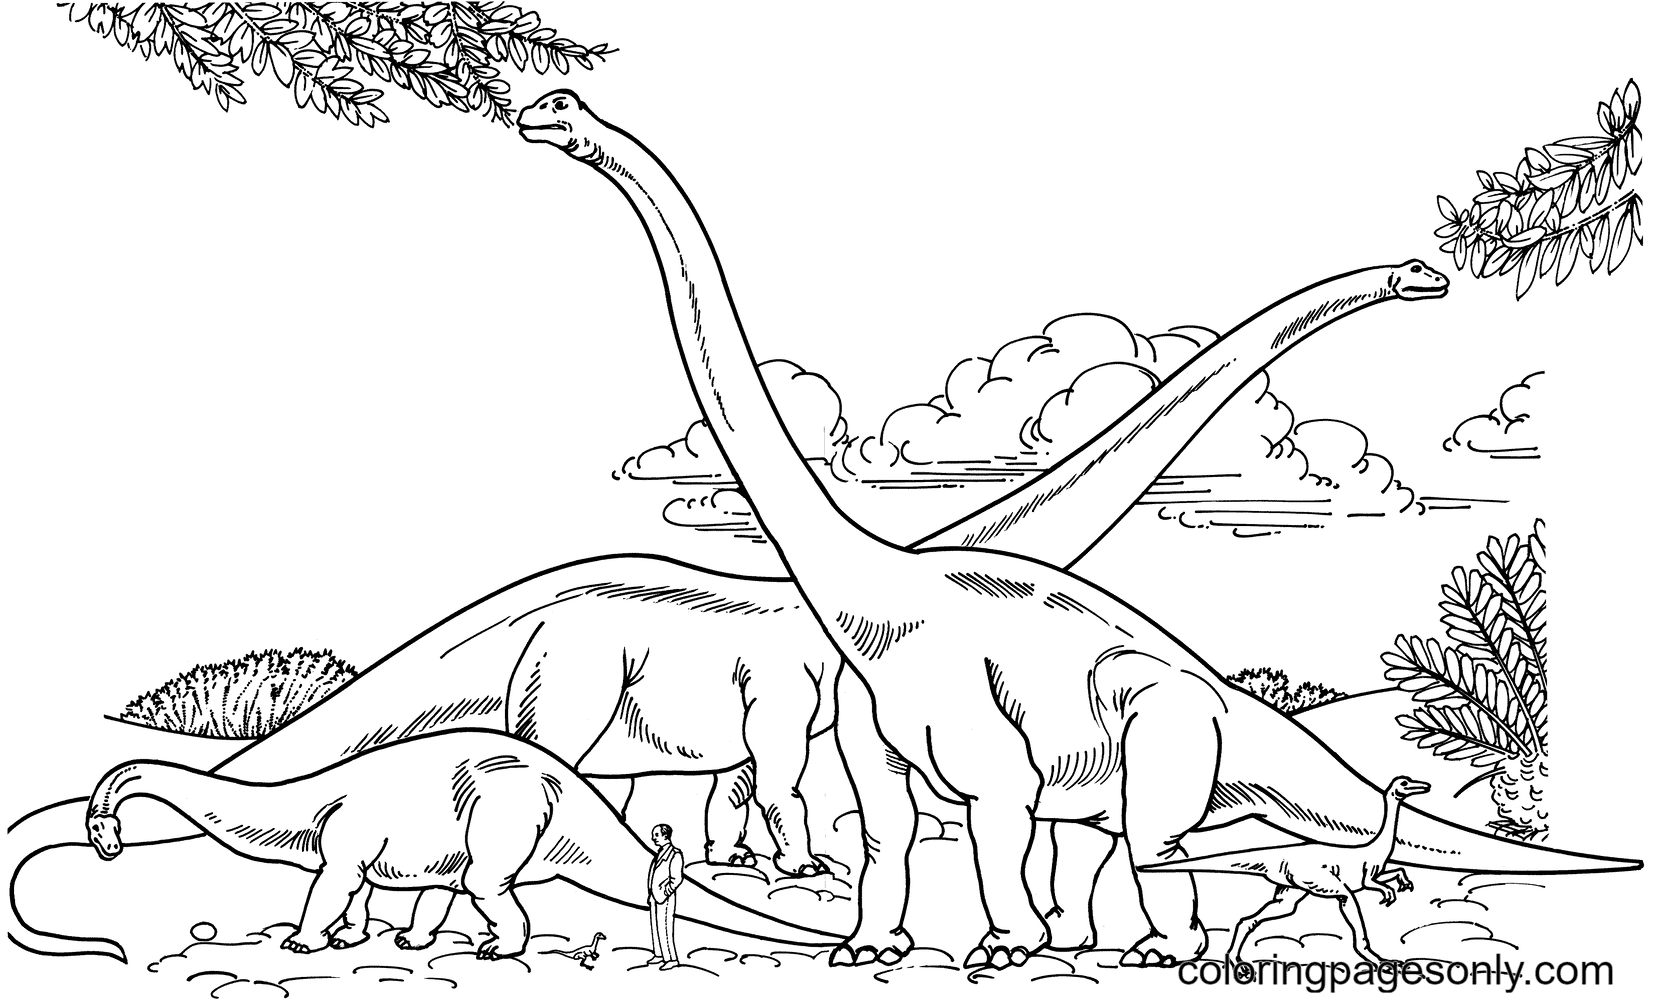 Barosaurus Hypselosaurus and Gallimimus Comparison With Human from Jurassic World